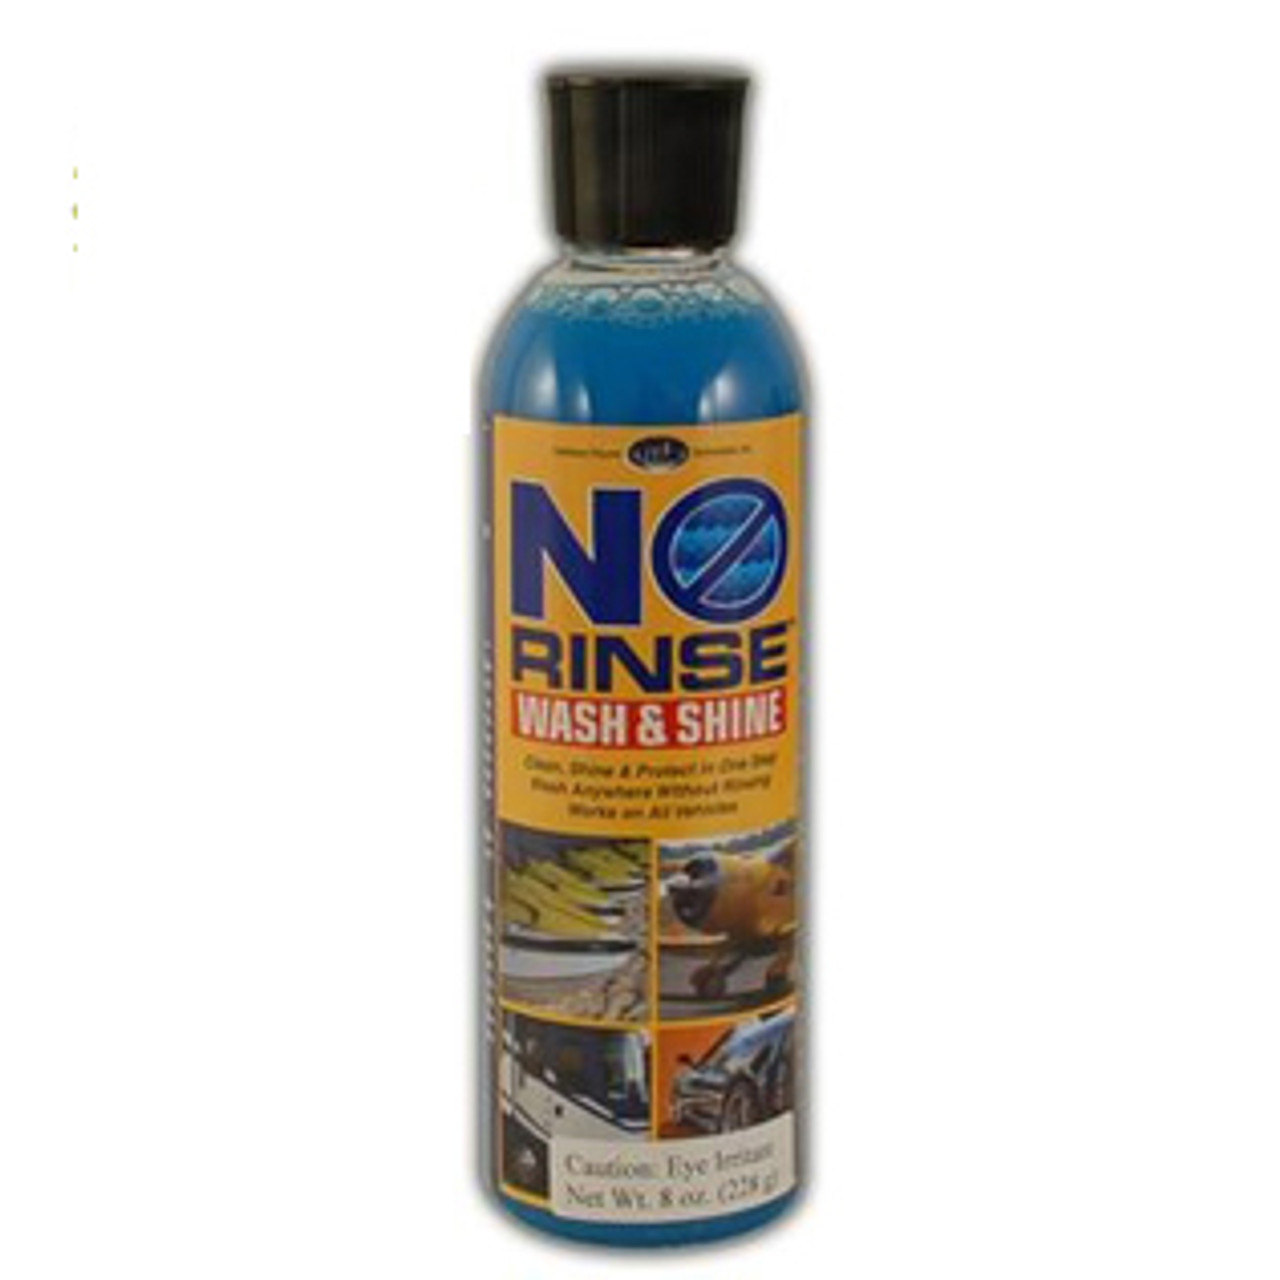 Optimum No Rinse Wash & Shine Car Wash 32 oz.2-Pack